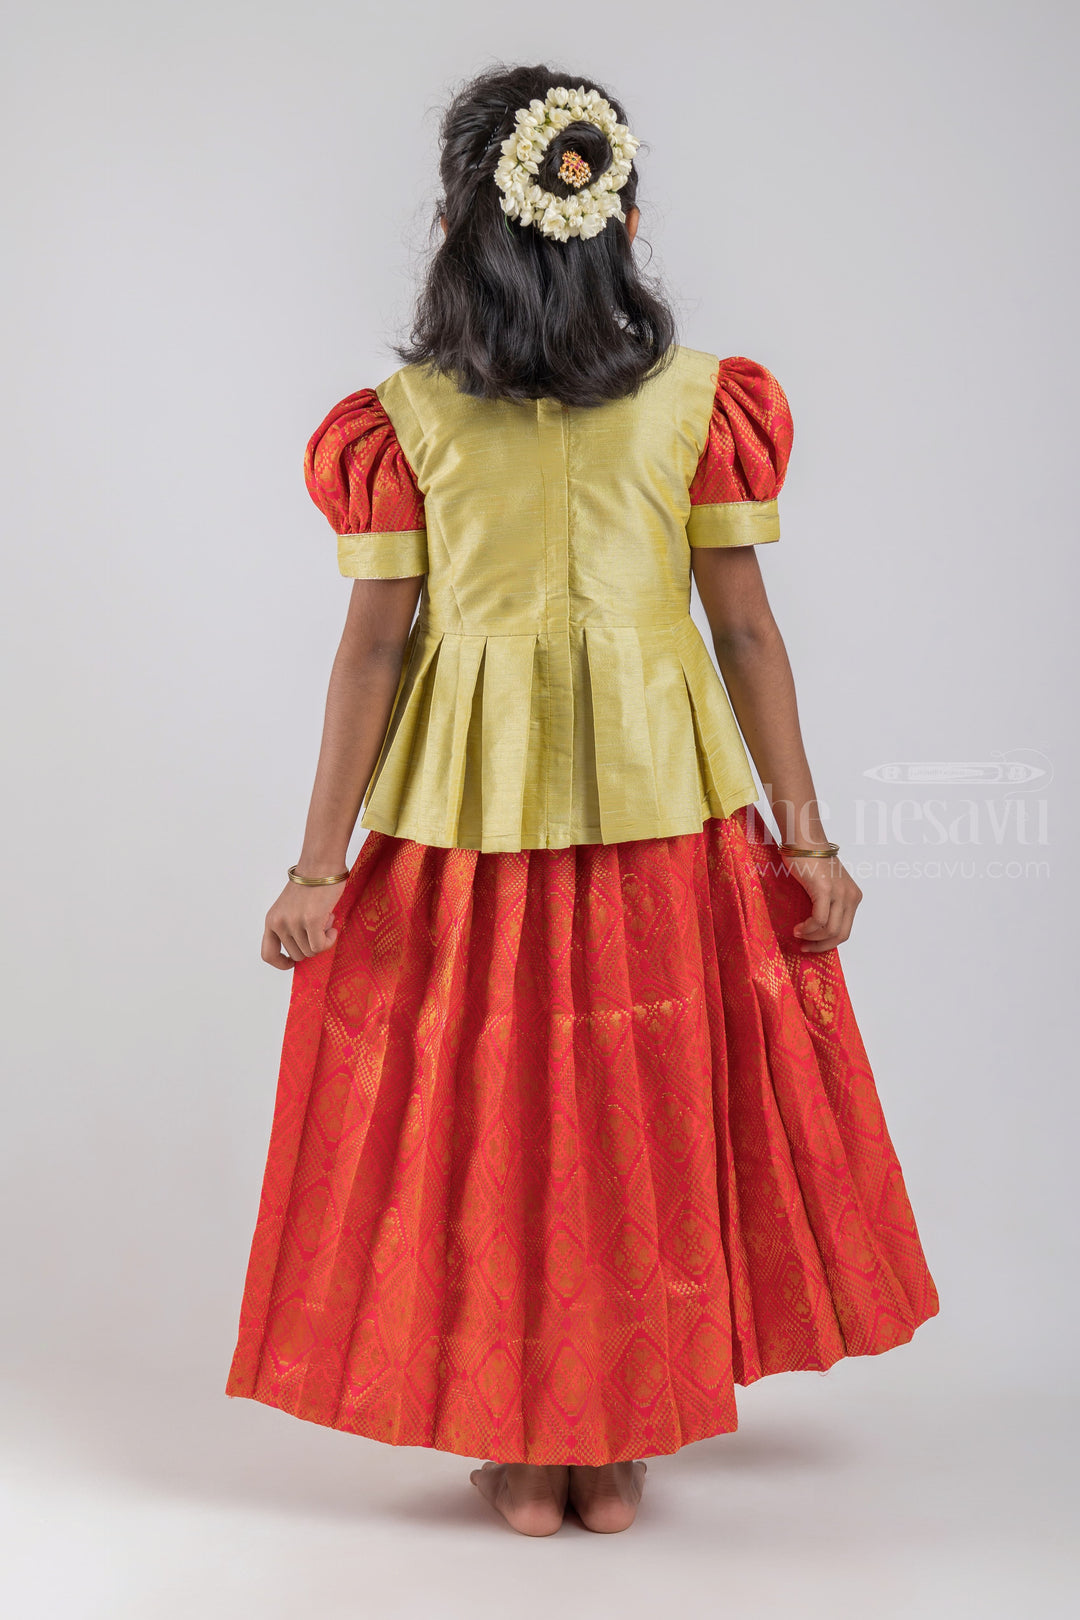 The Nesavu Pattu Pavadai Kerala Pattu Pavadai Designs: Timeless Elegance for Your Little One psr silks Nesavu